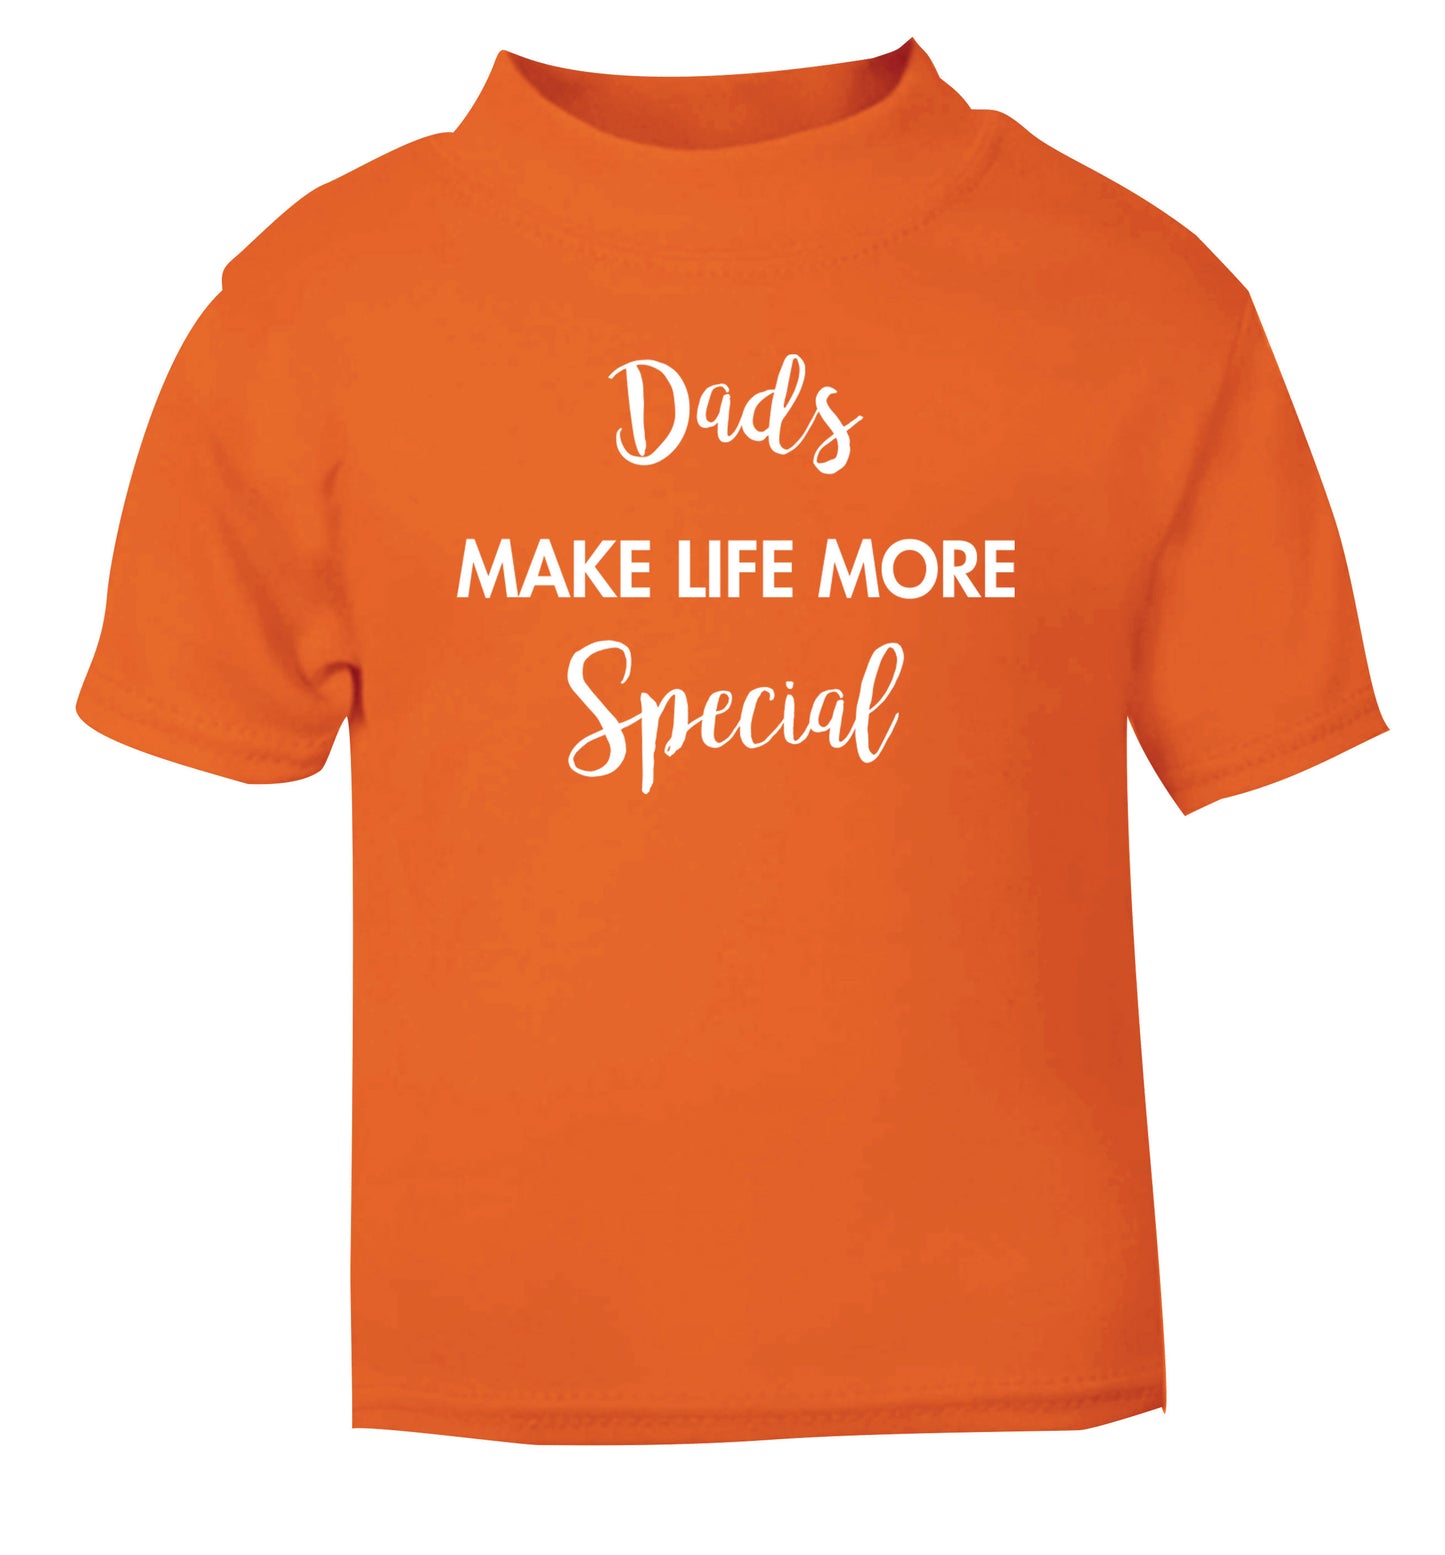 Dads make life more special orange Baby Toddler Tshirt 2 Years